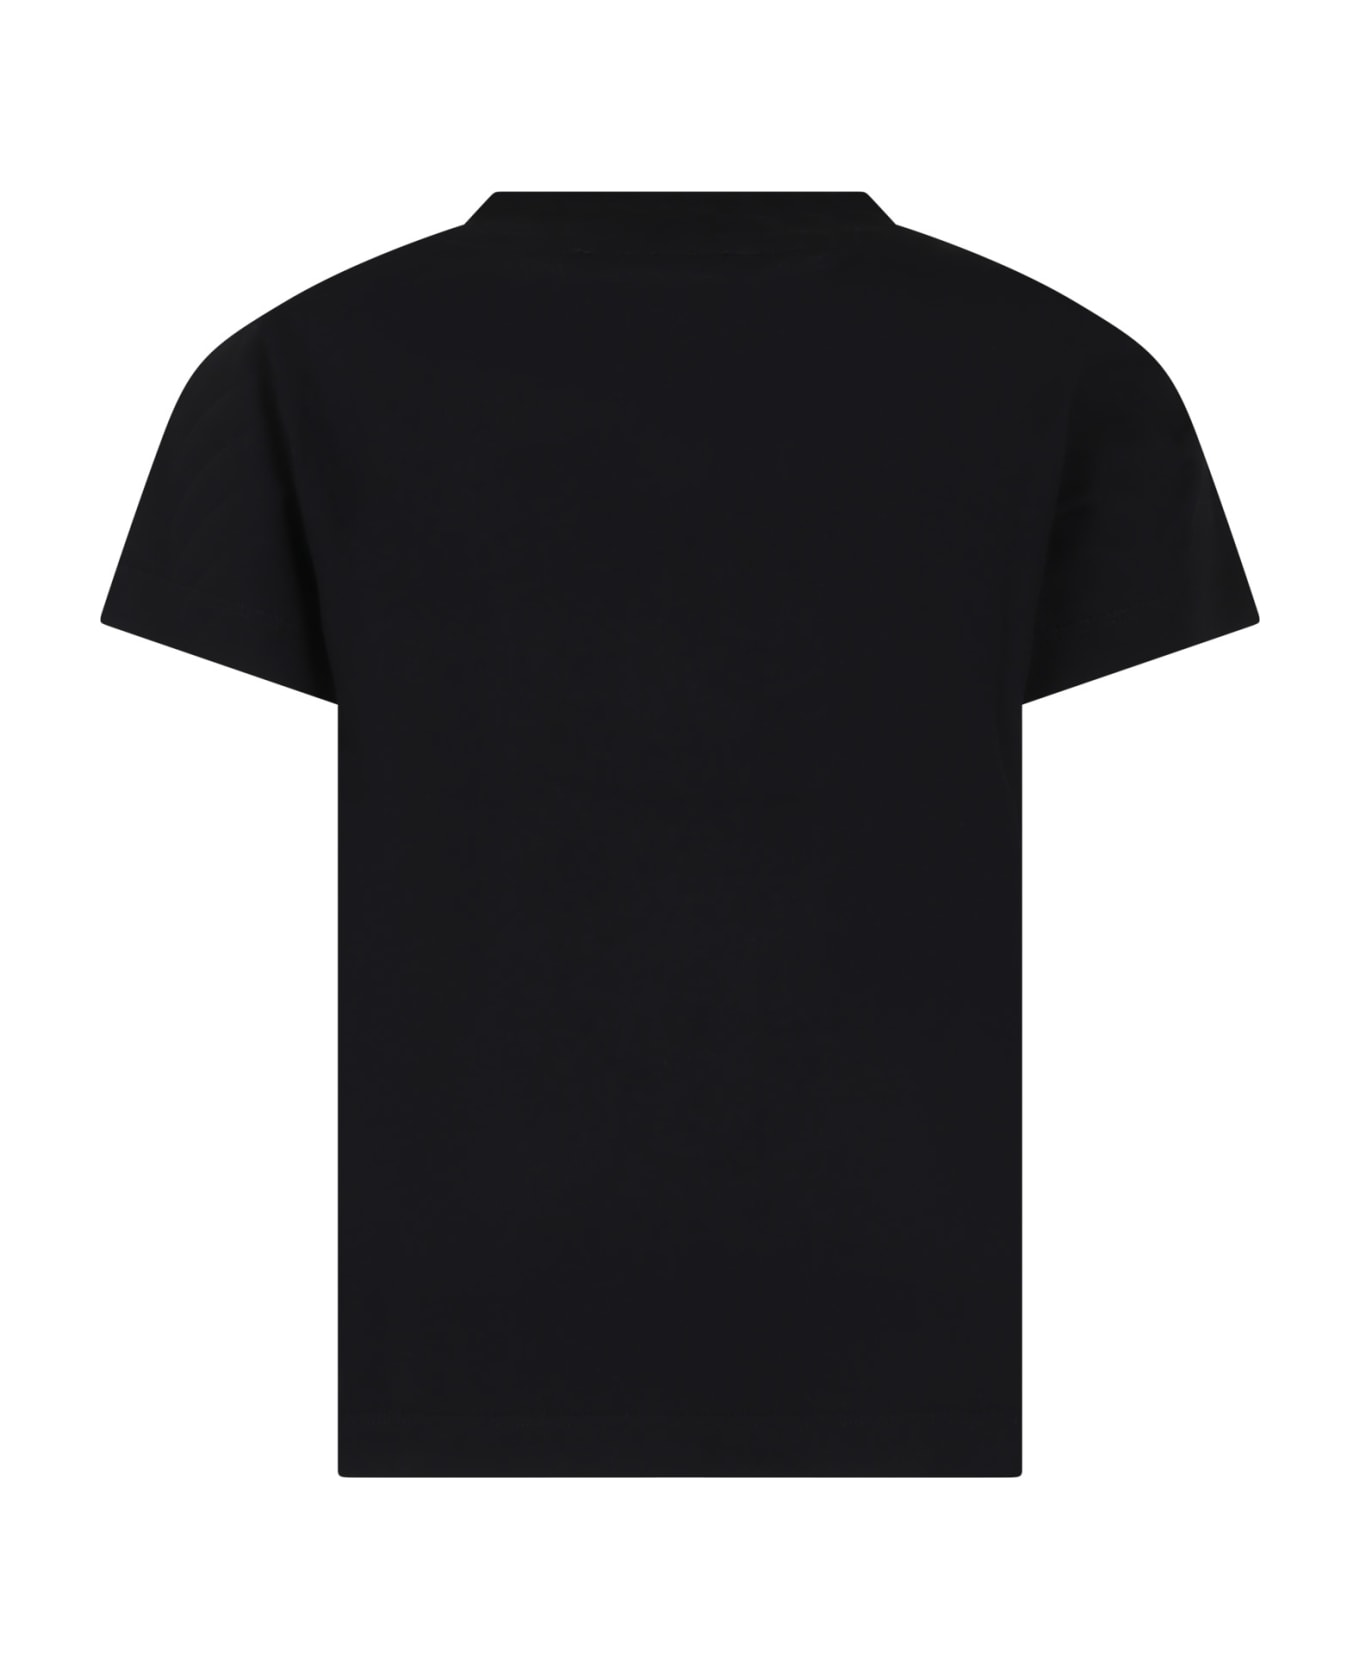 Balmain Black T-shirt For Kids With Logo - Black